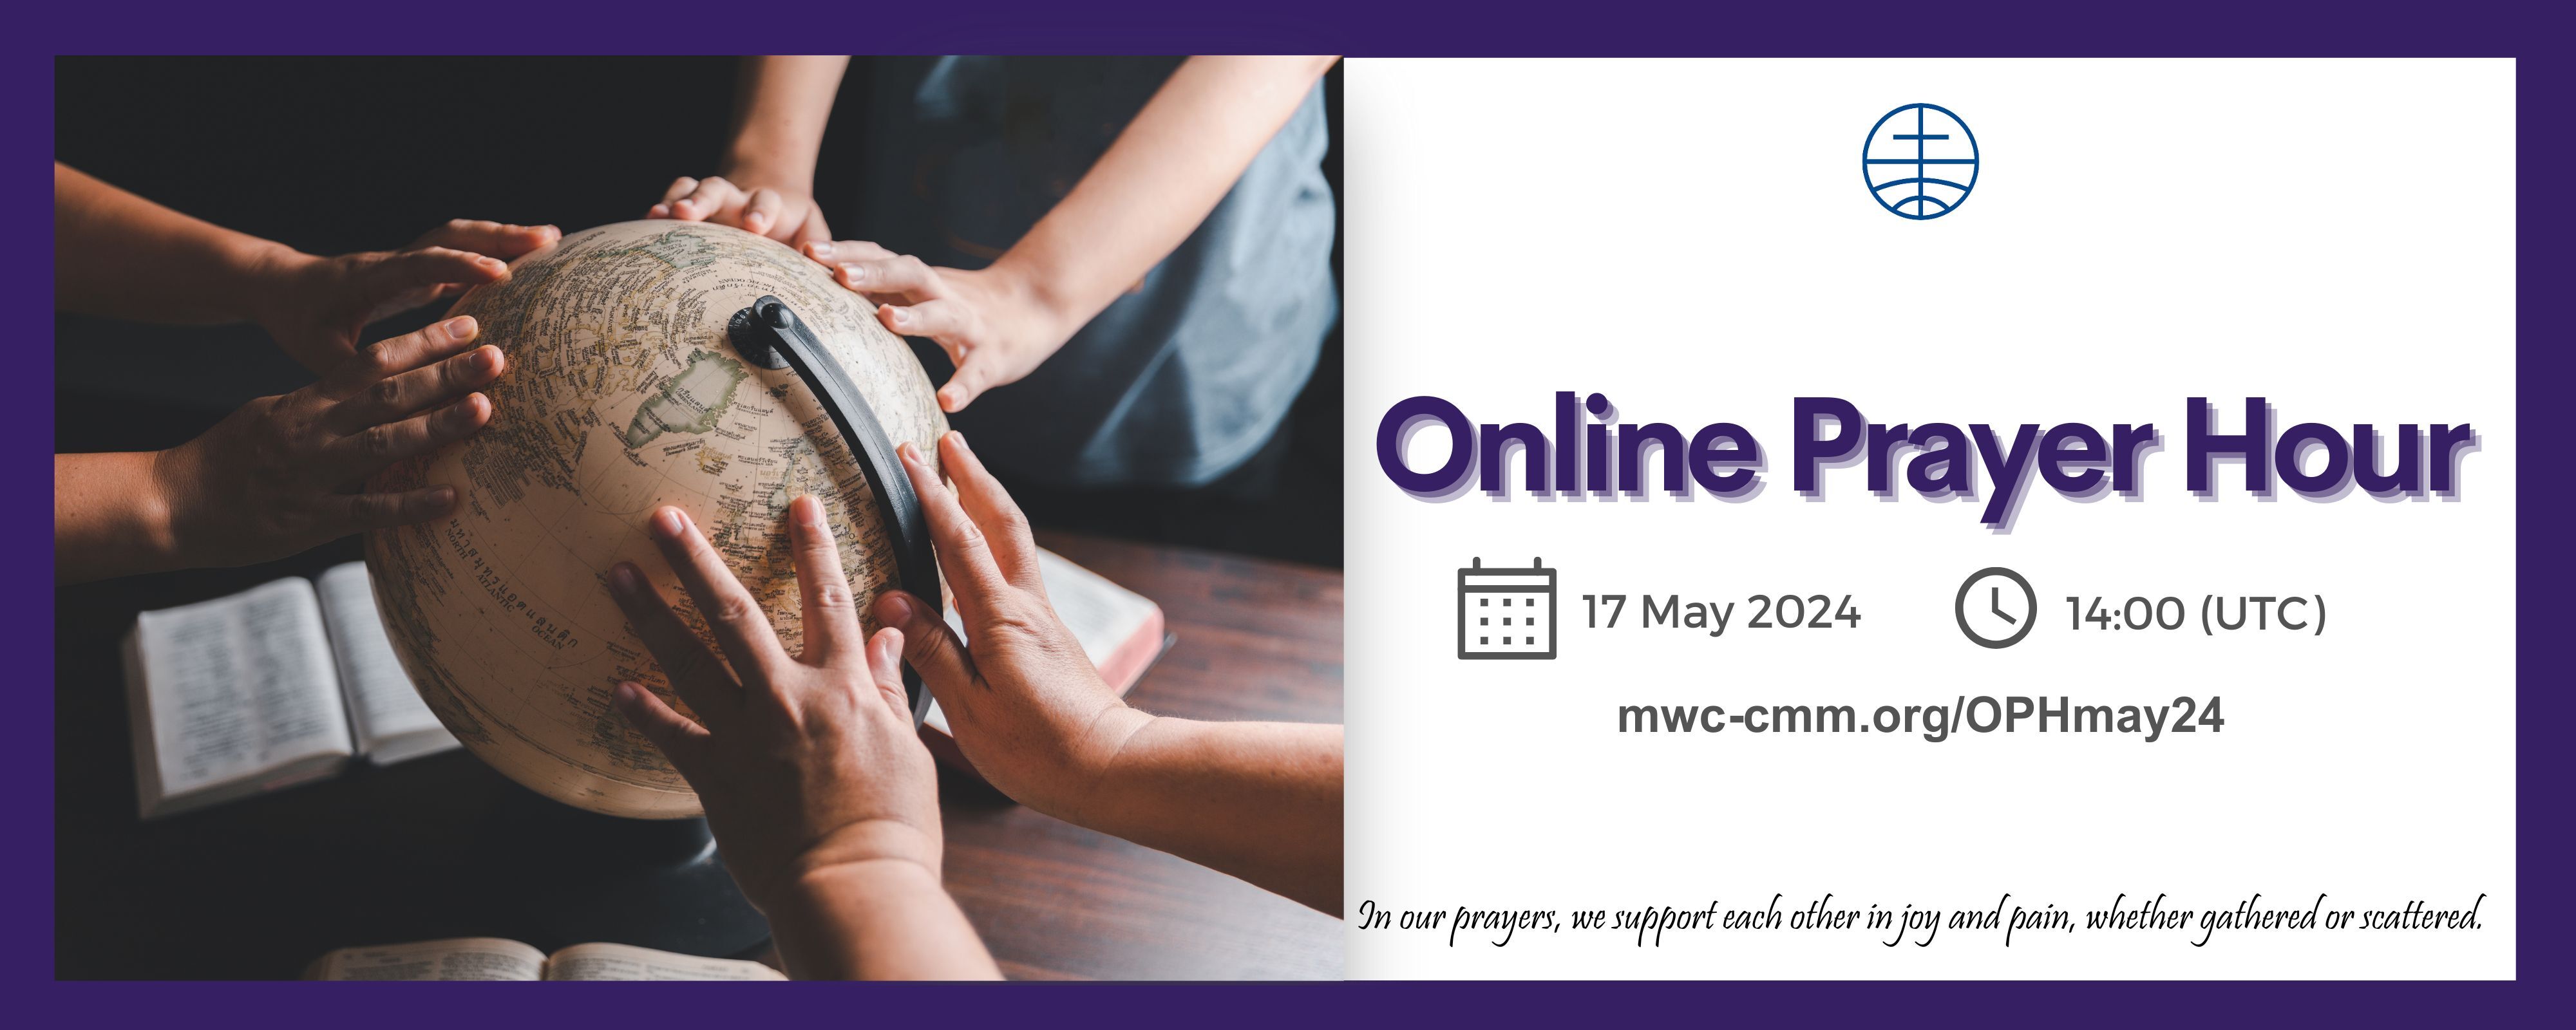 Online Prayer Hour registration 17 May 2024